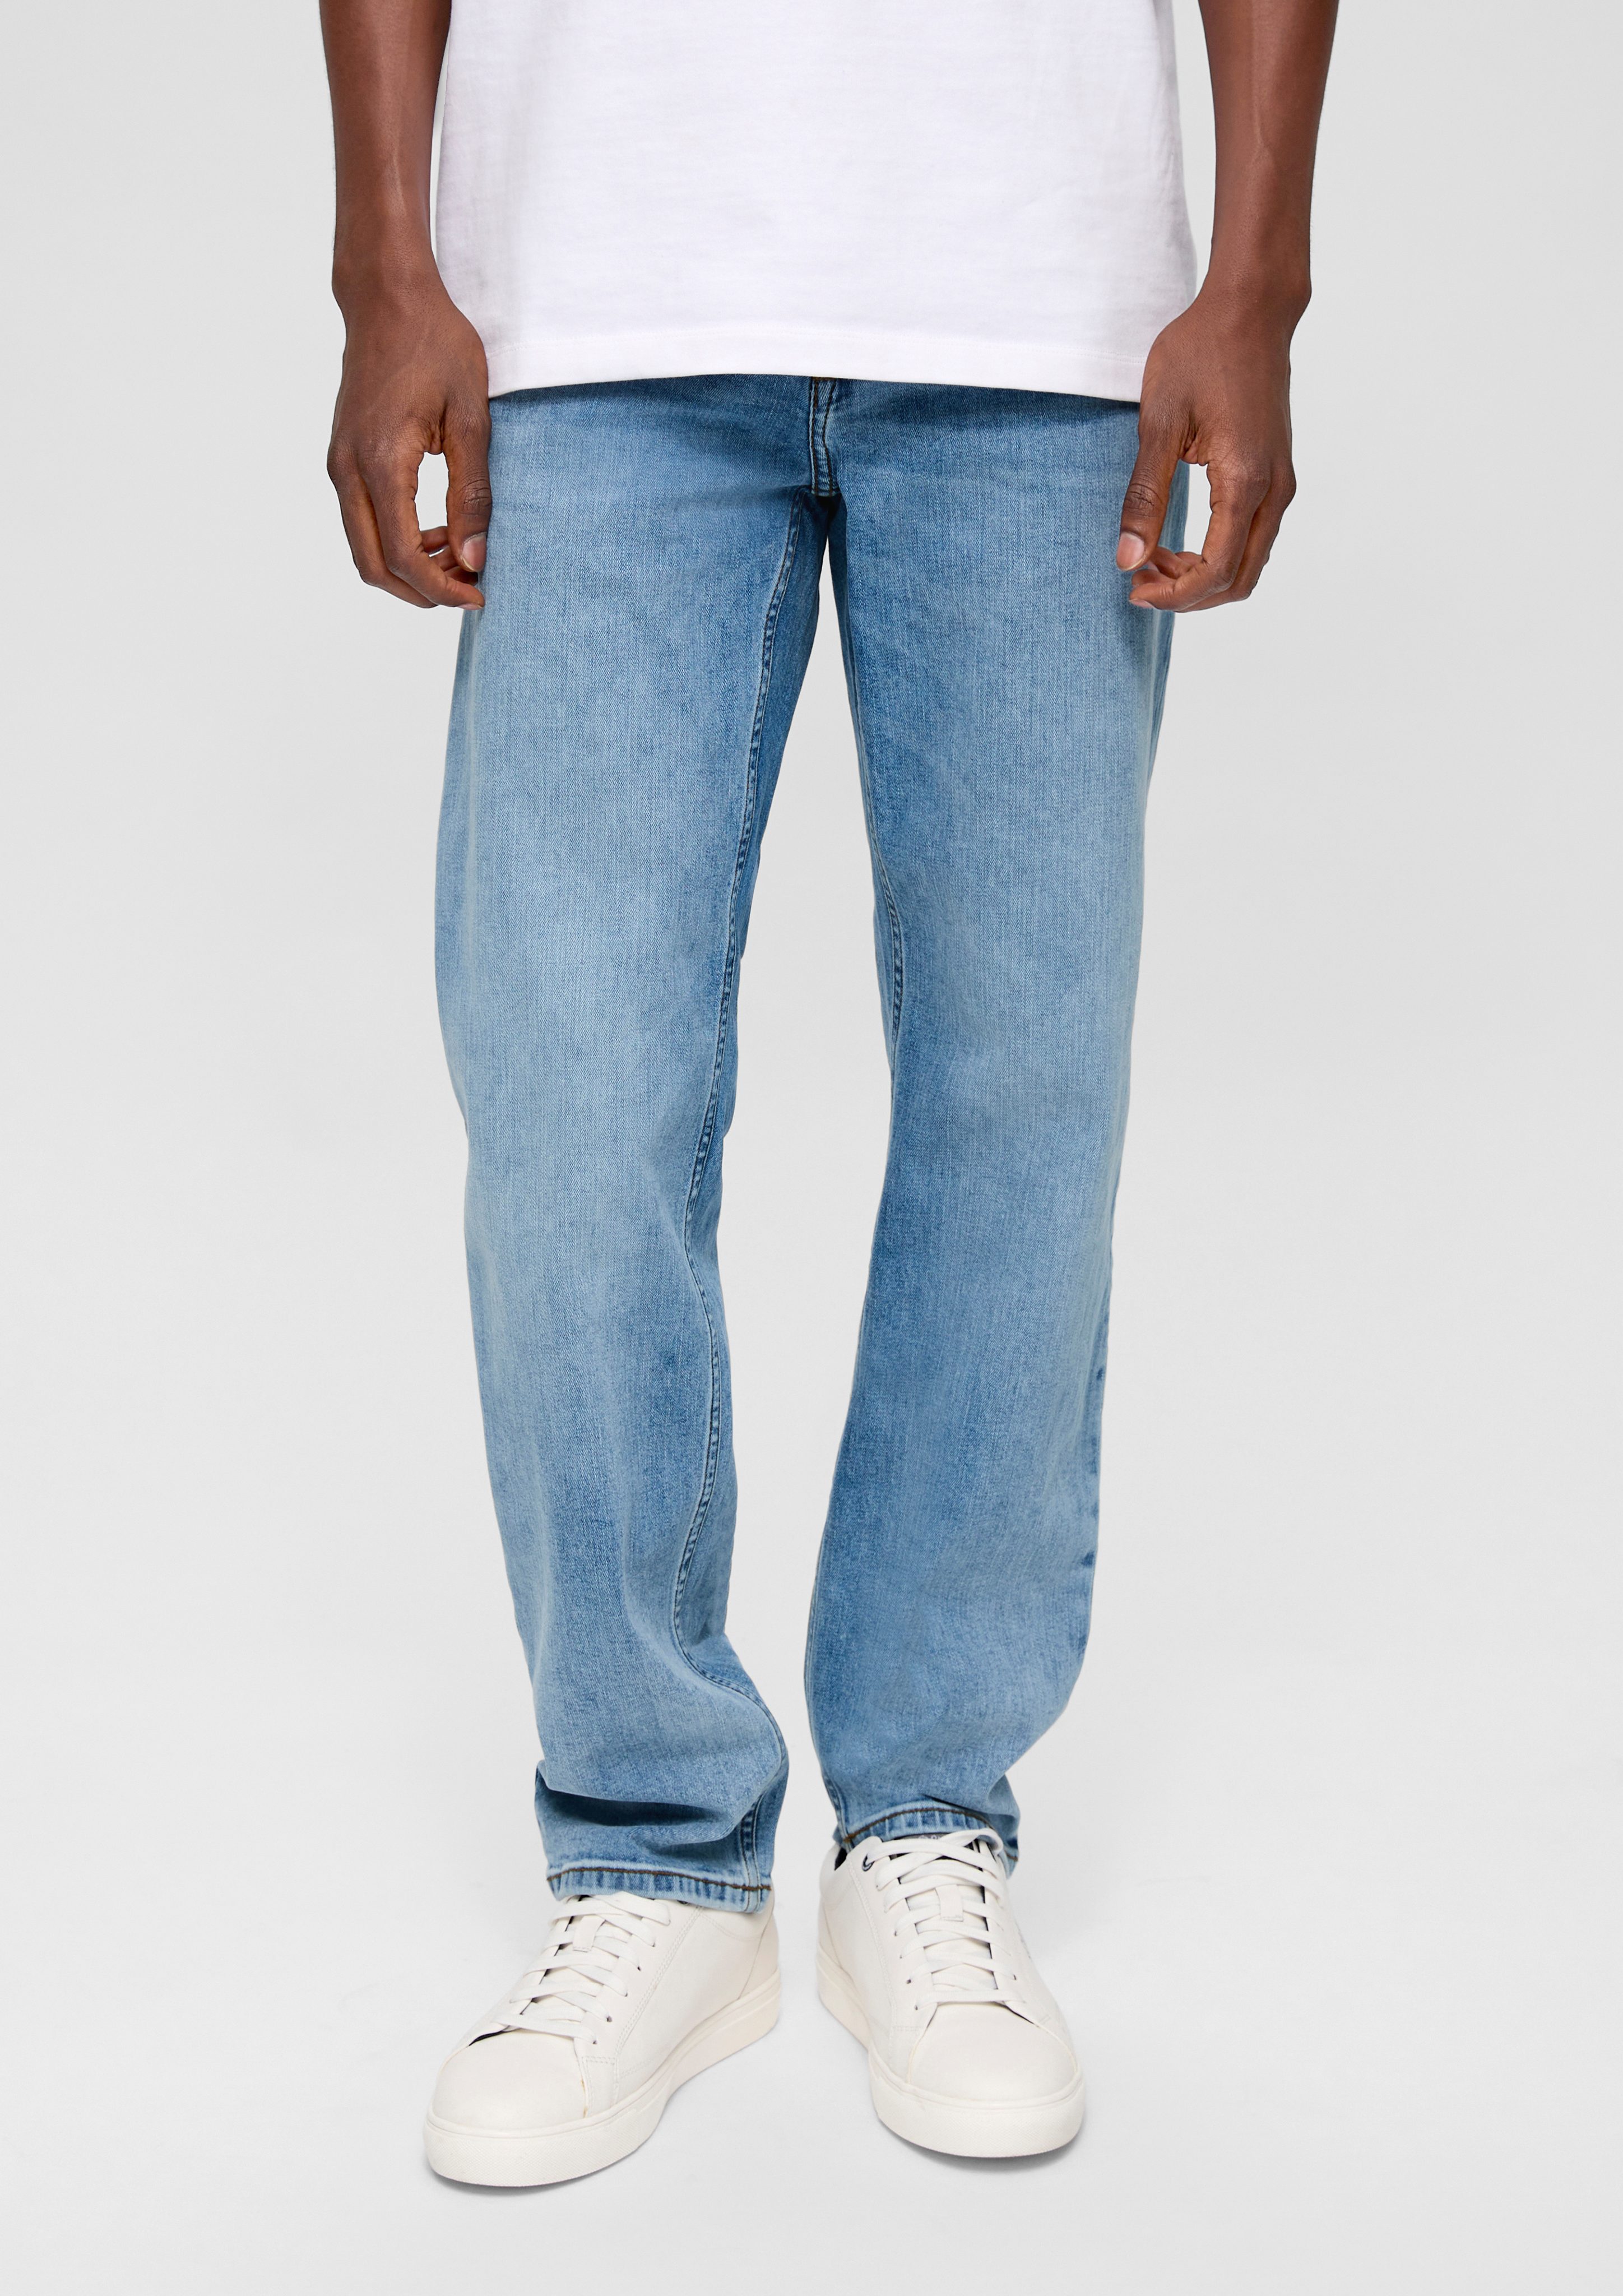 Baumwollstretch Stoffhose s.Oliver / / Rise Mid Nelio Slim Label-Patch / / Slim Jeans Fit Leg